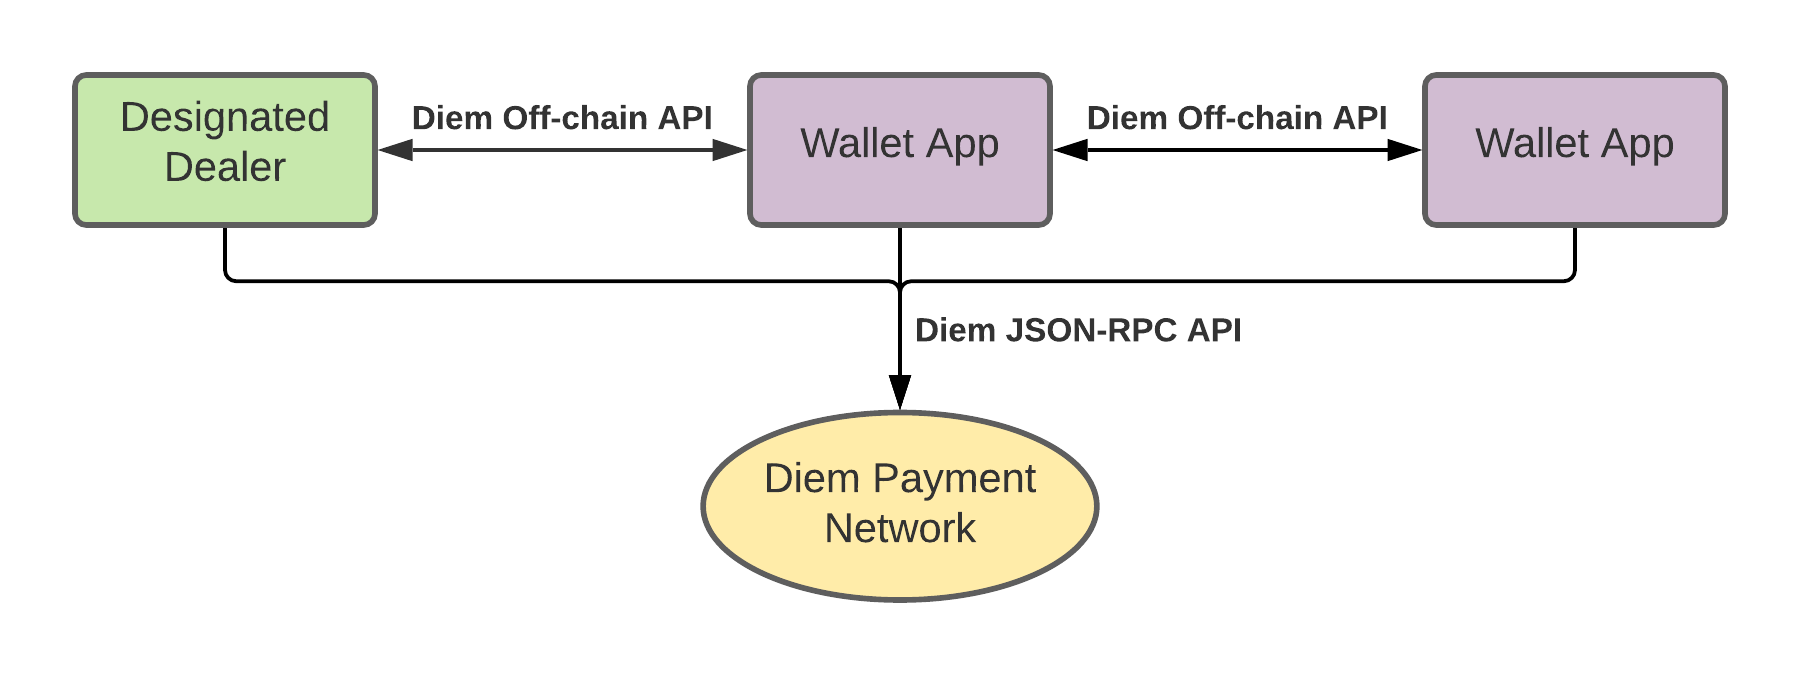 Diem Payment Network Integration Overview